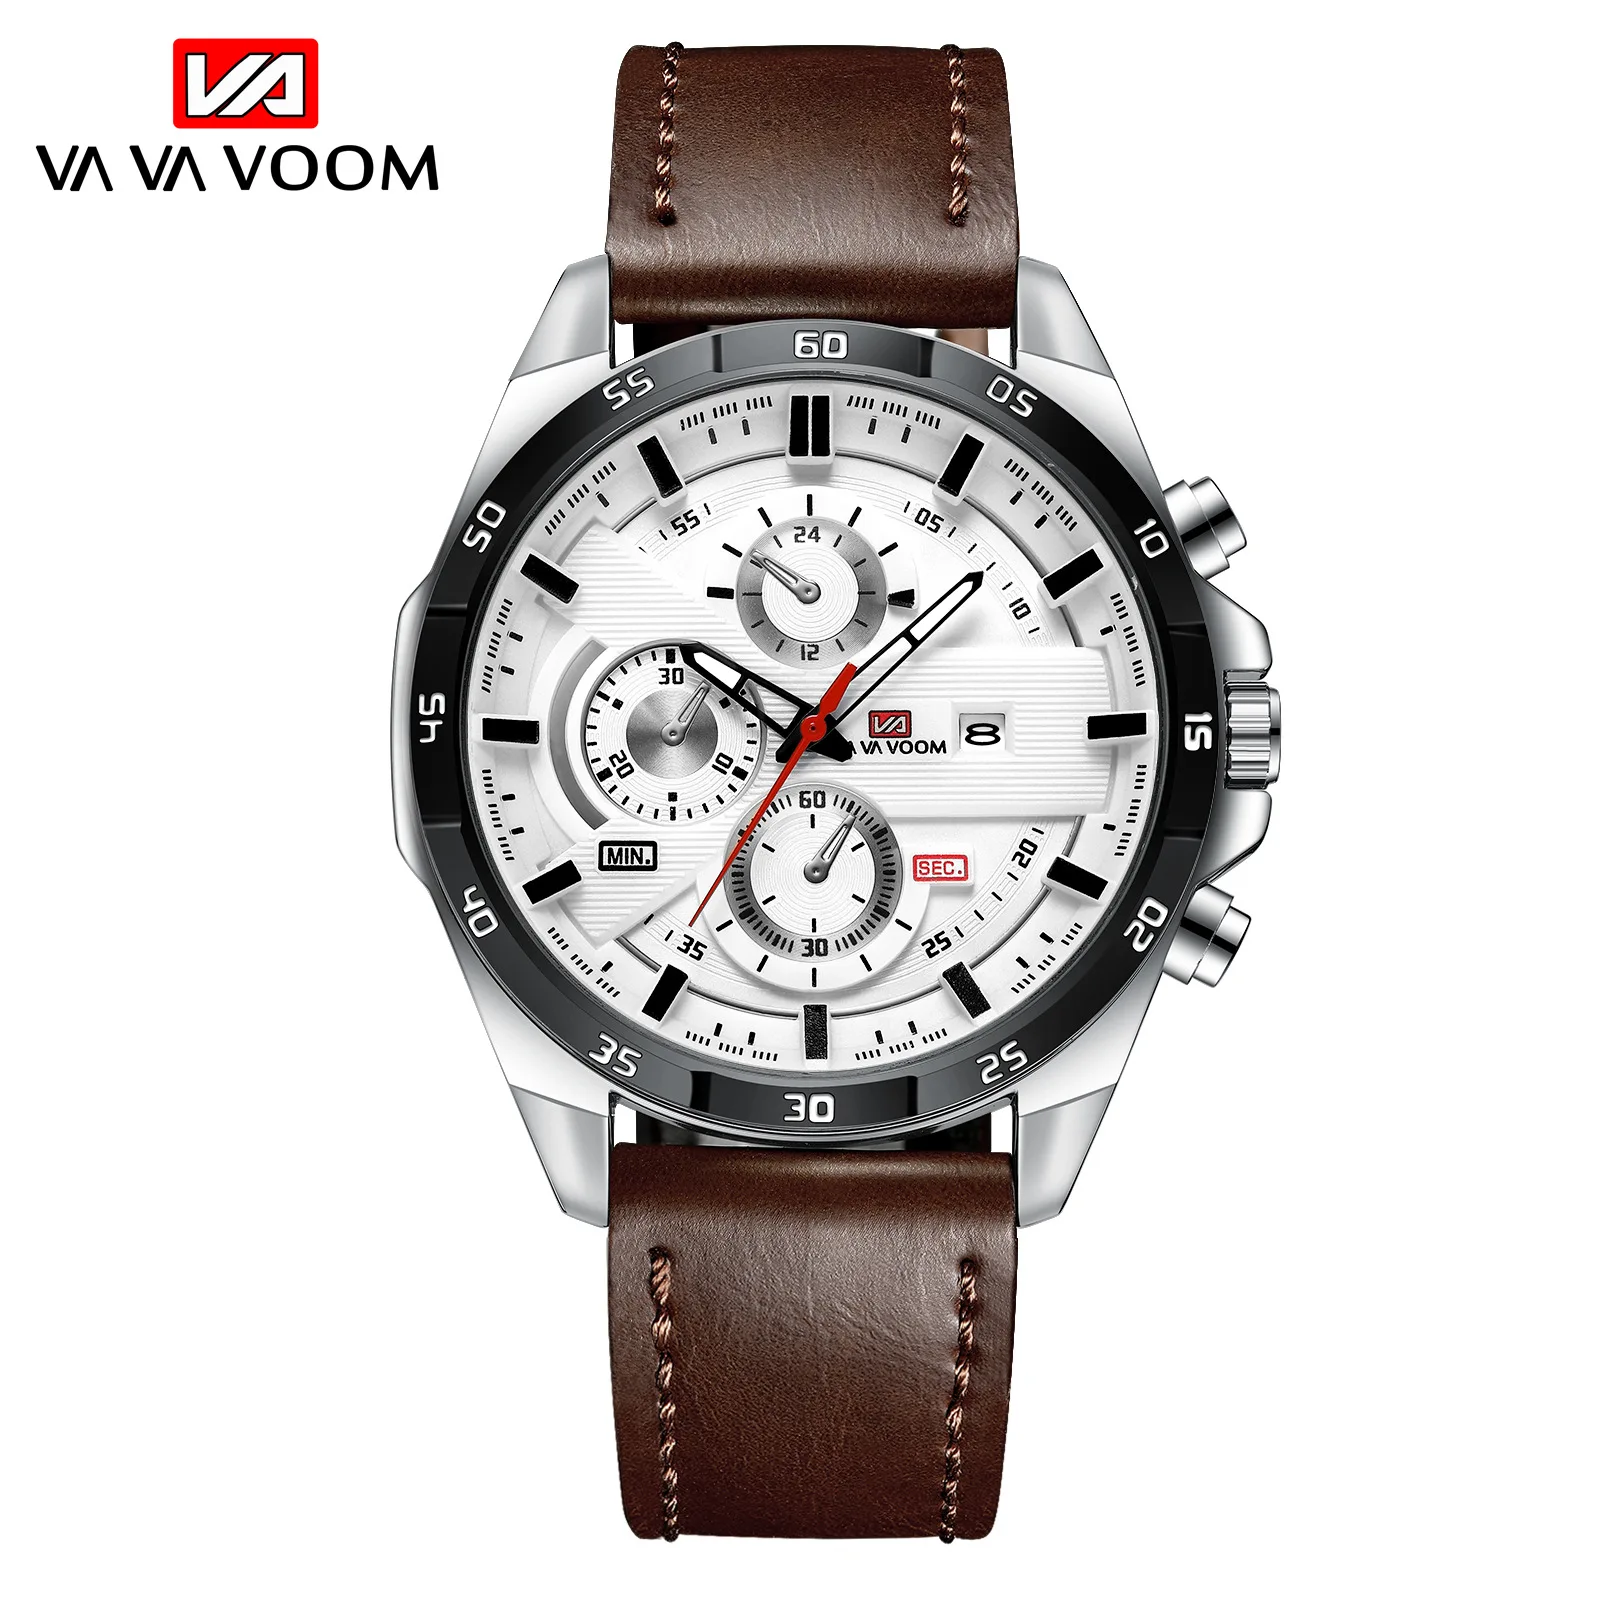 
New Men Watches Calendar Leather Strap Quartz Watch Waterproof Casual Business Wrist Watch for Men 2020 